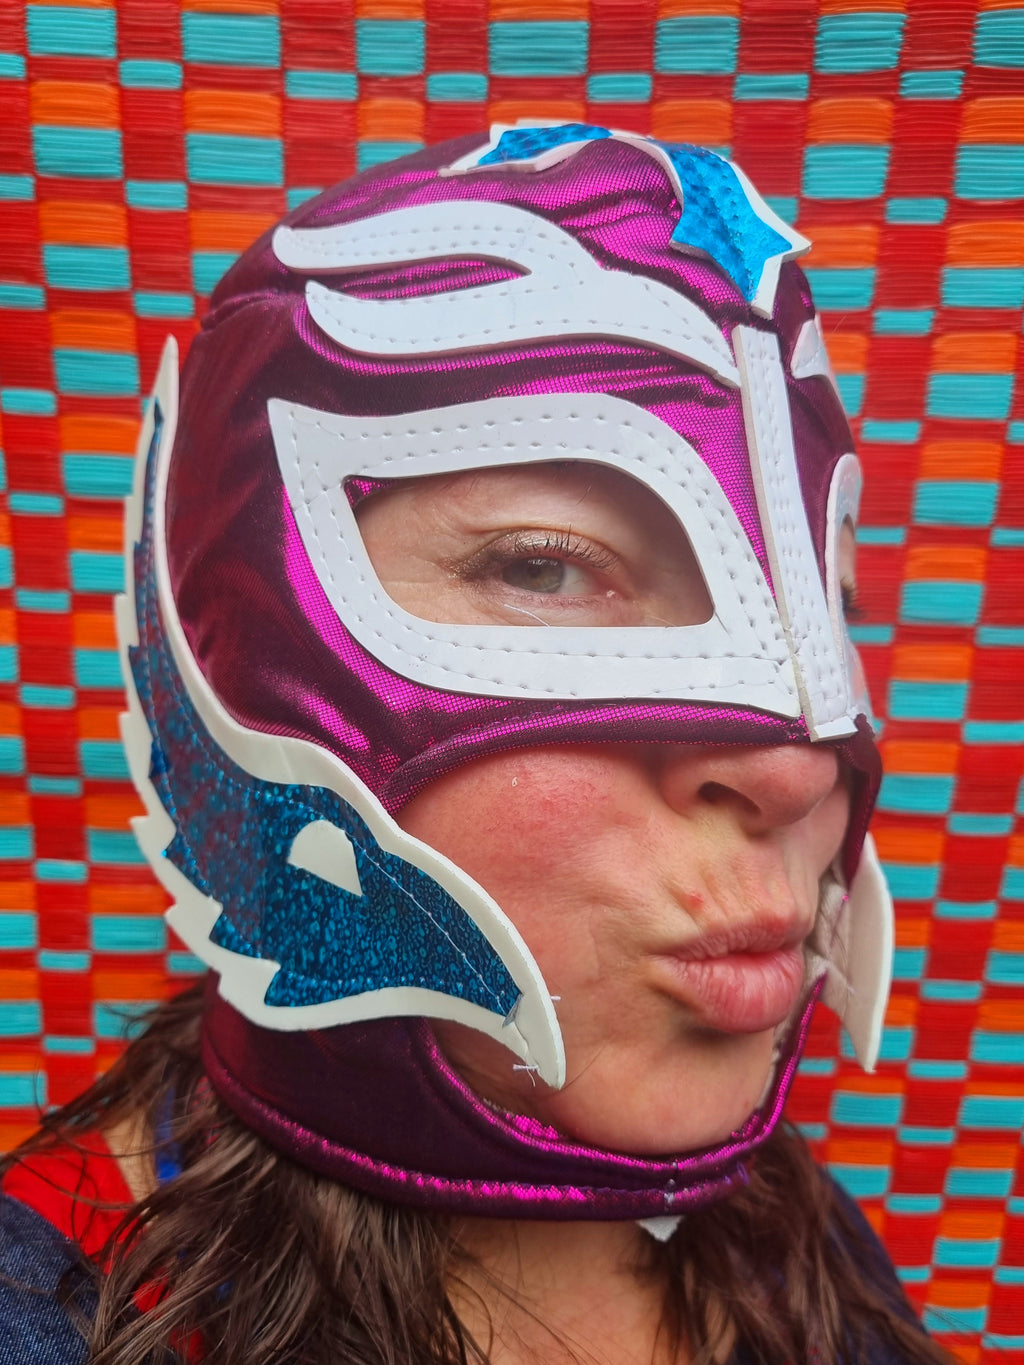 Mexican wrestling masks adult